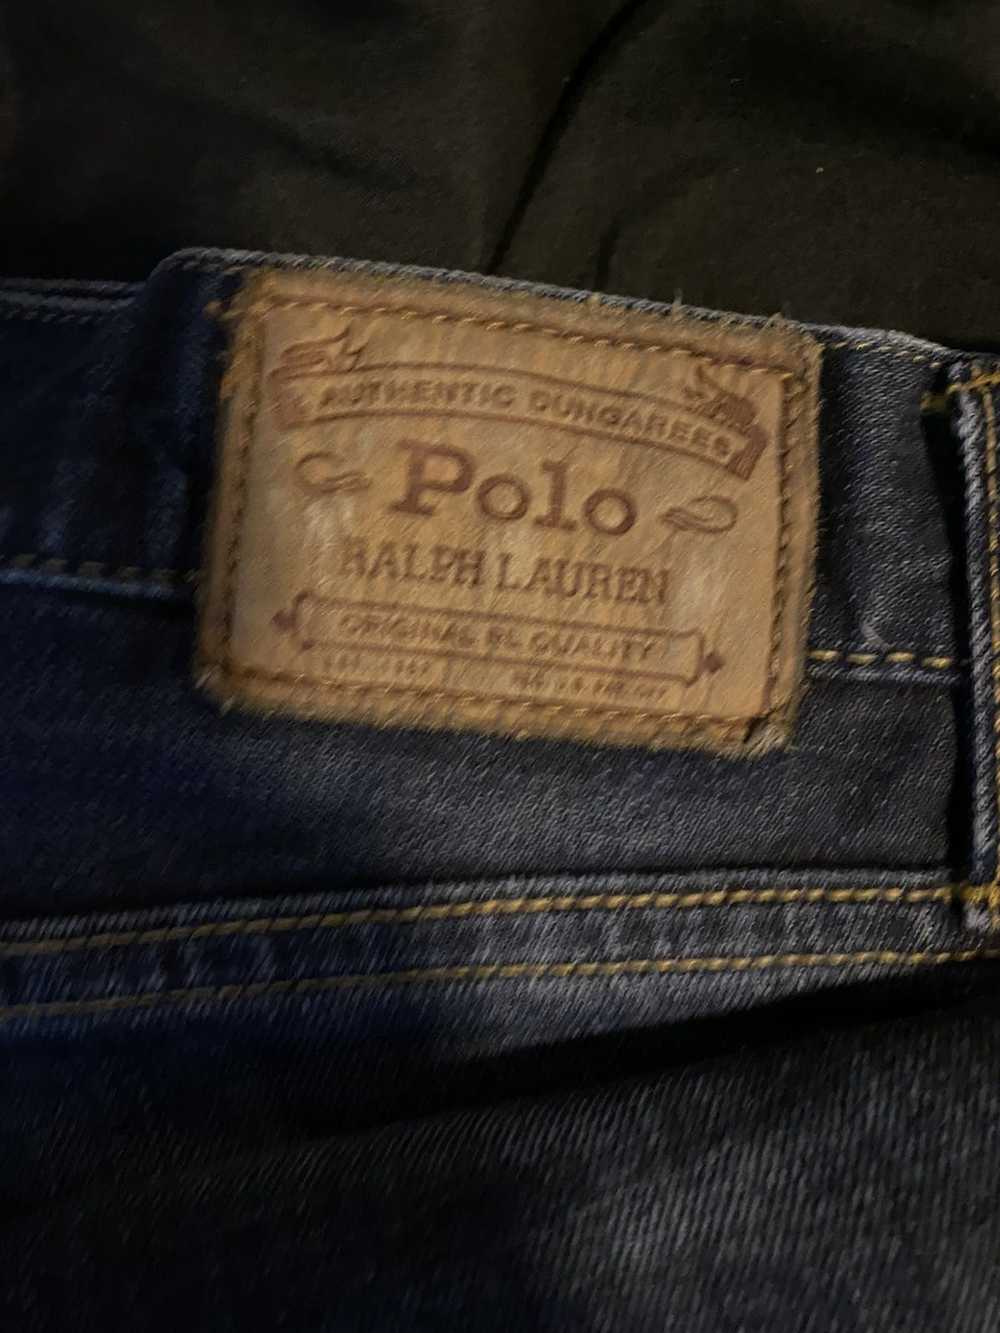 Polo Ralph Lauren Polo RL Jeans - image 2